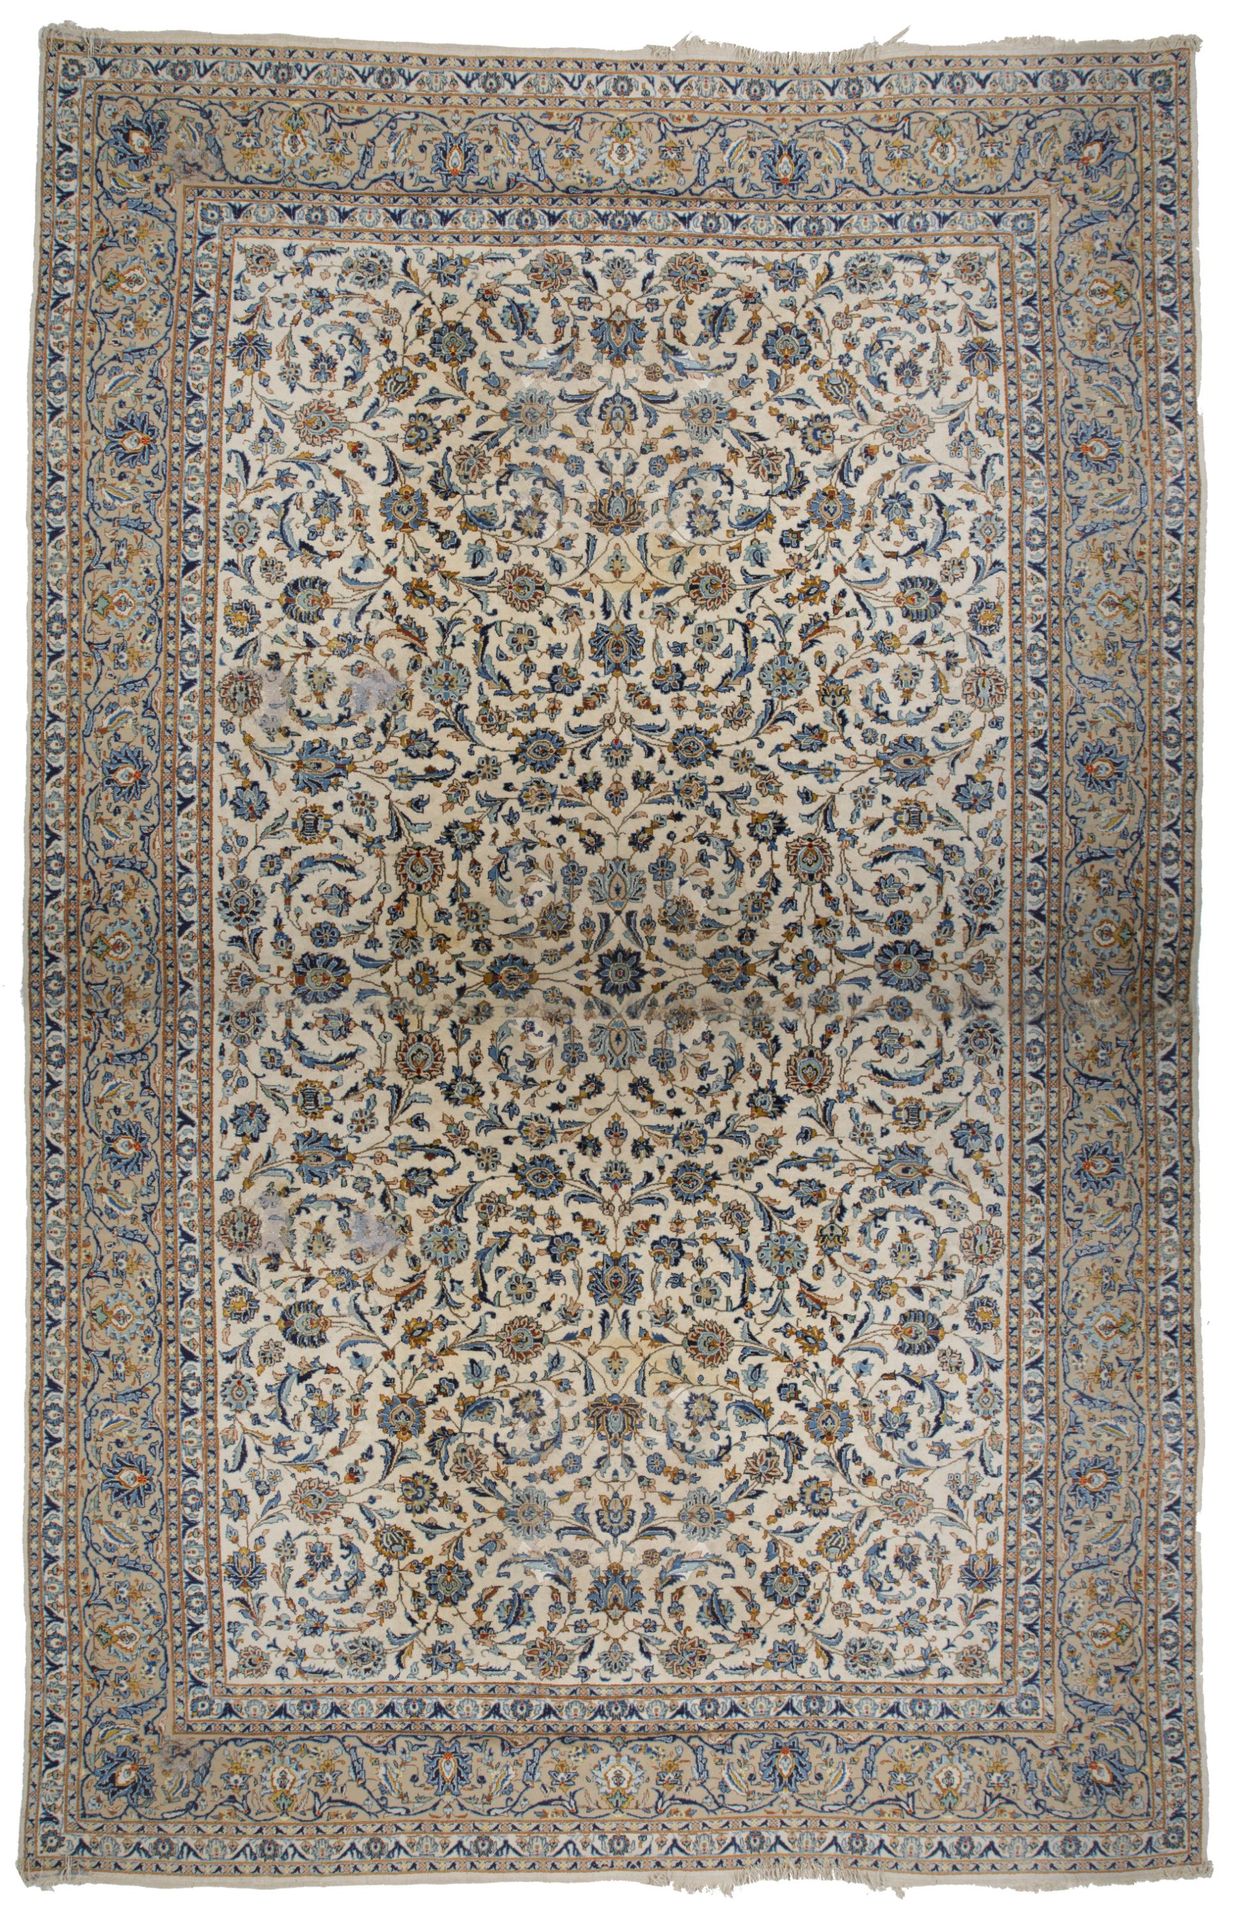 Persian hand-knotted wool rug, Kashan, mid 20th century. Rohes Feld und Blumende&hellip;